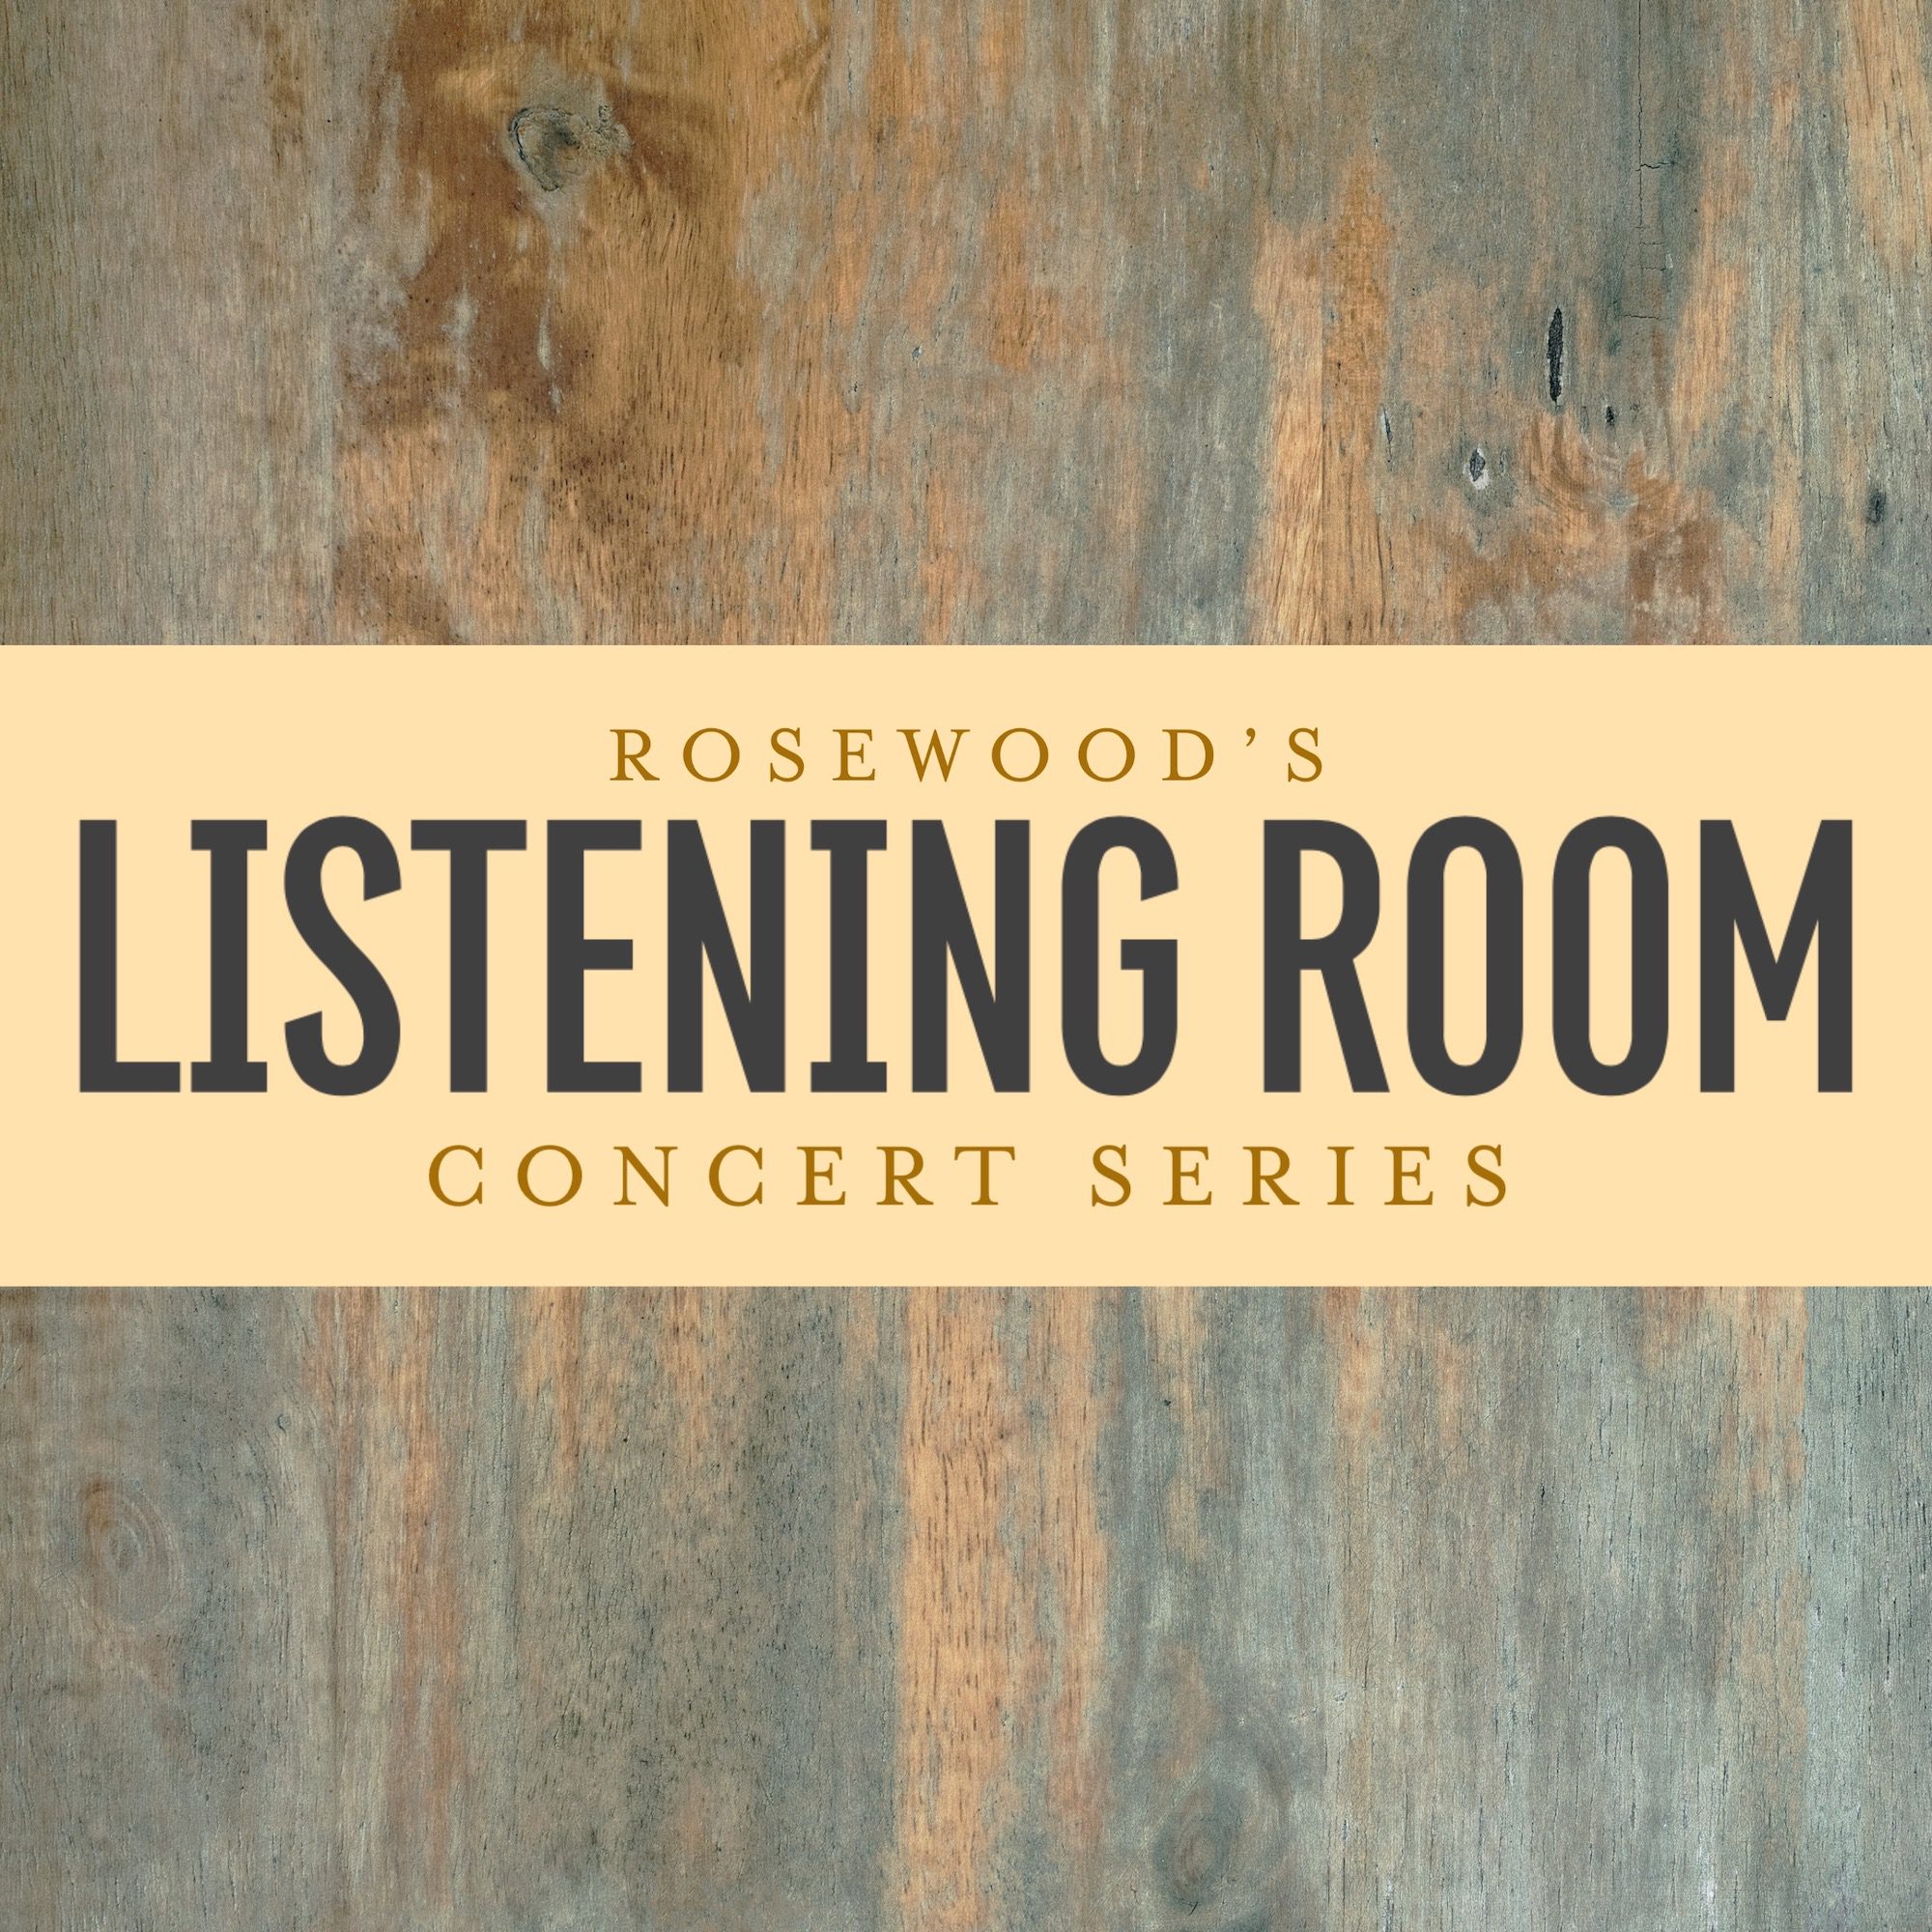 Rosewood LISTEING ROOM-1 copy